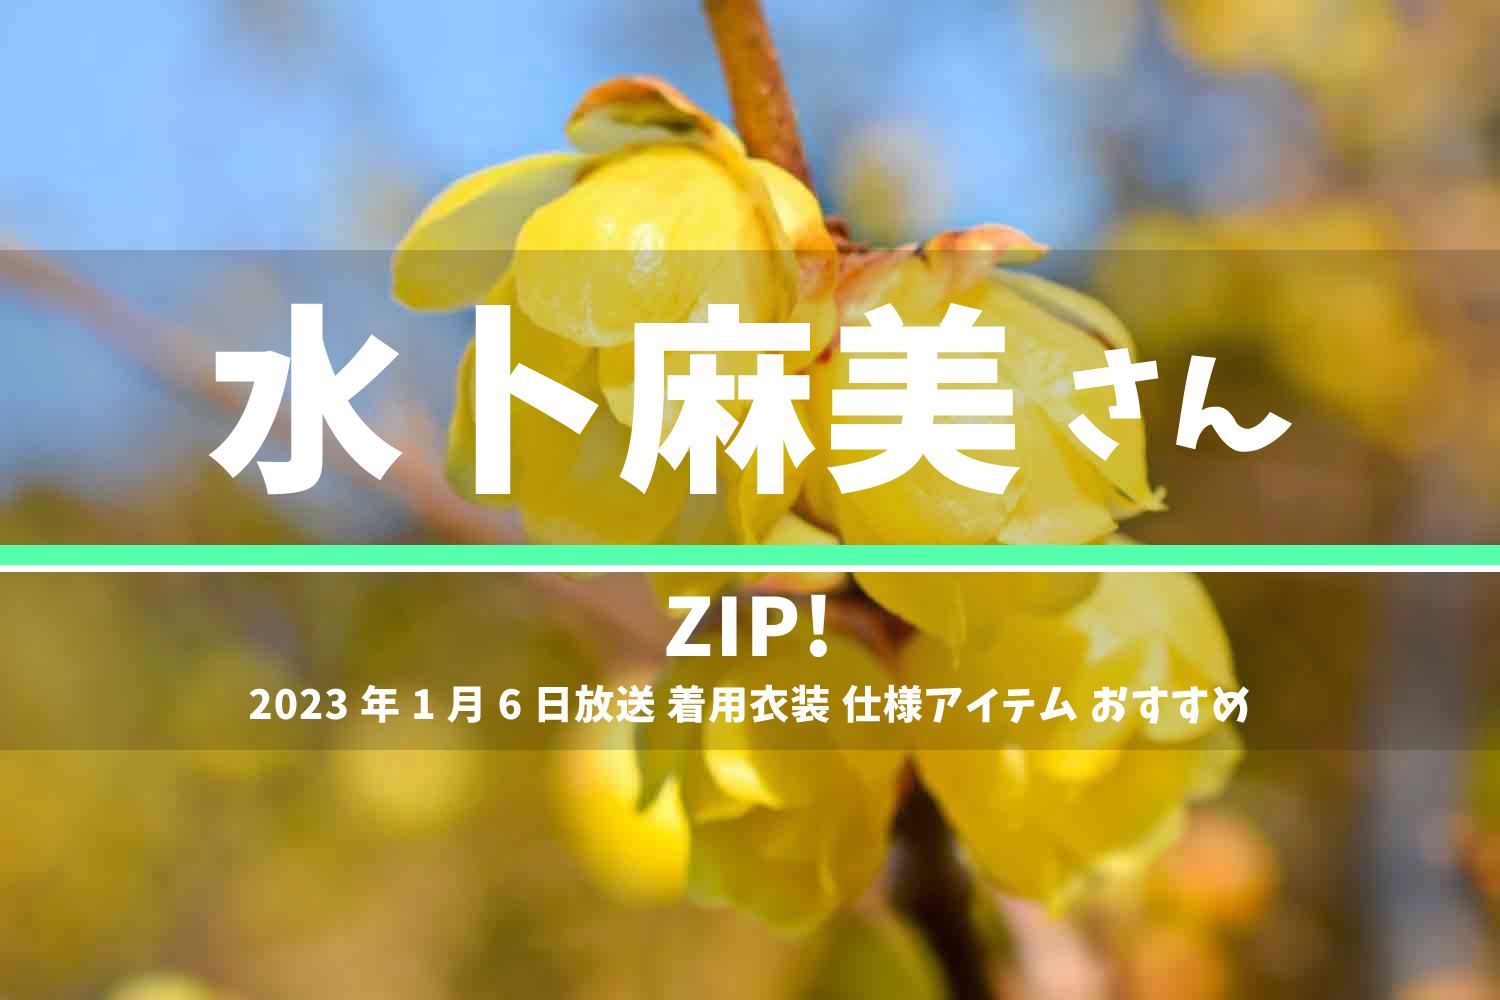 ZIP! 水卜麻美さん 番組 衣装 2023年1月6日放送